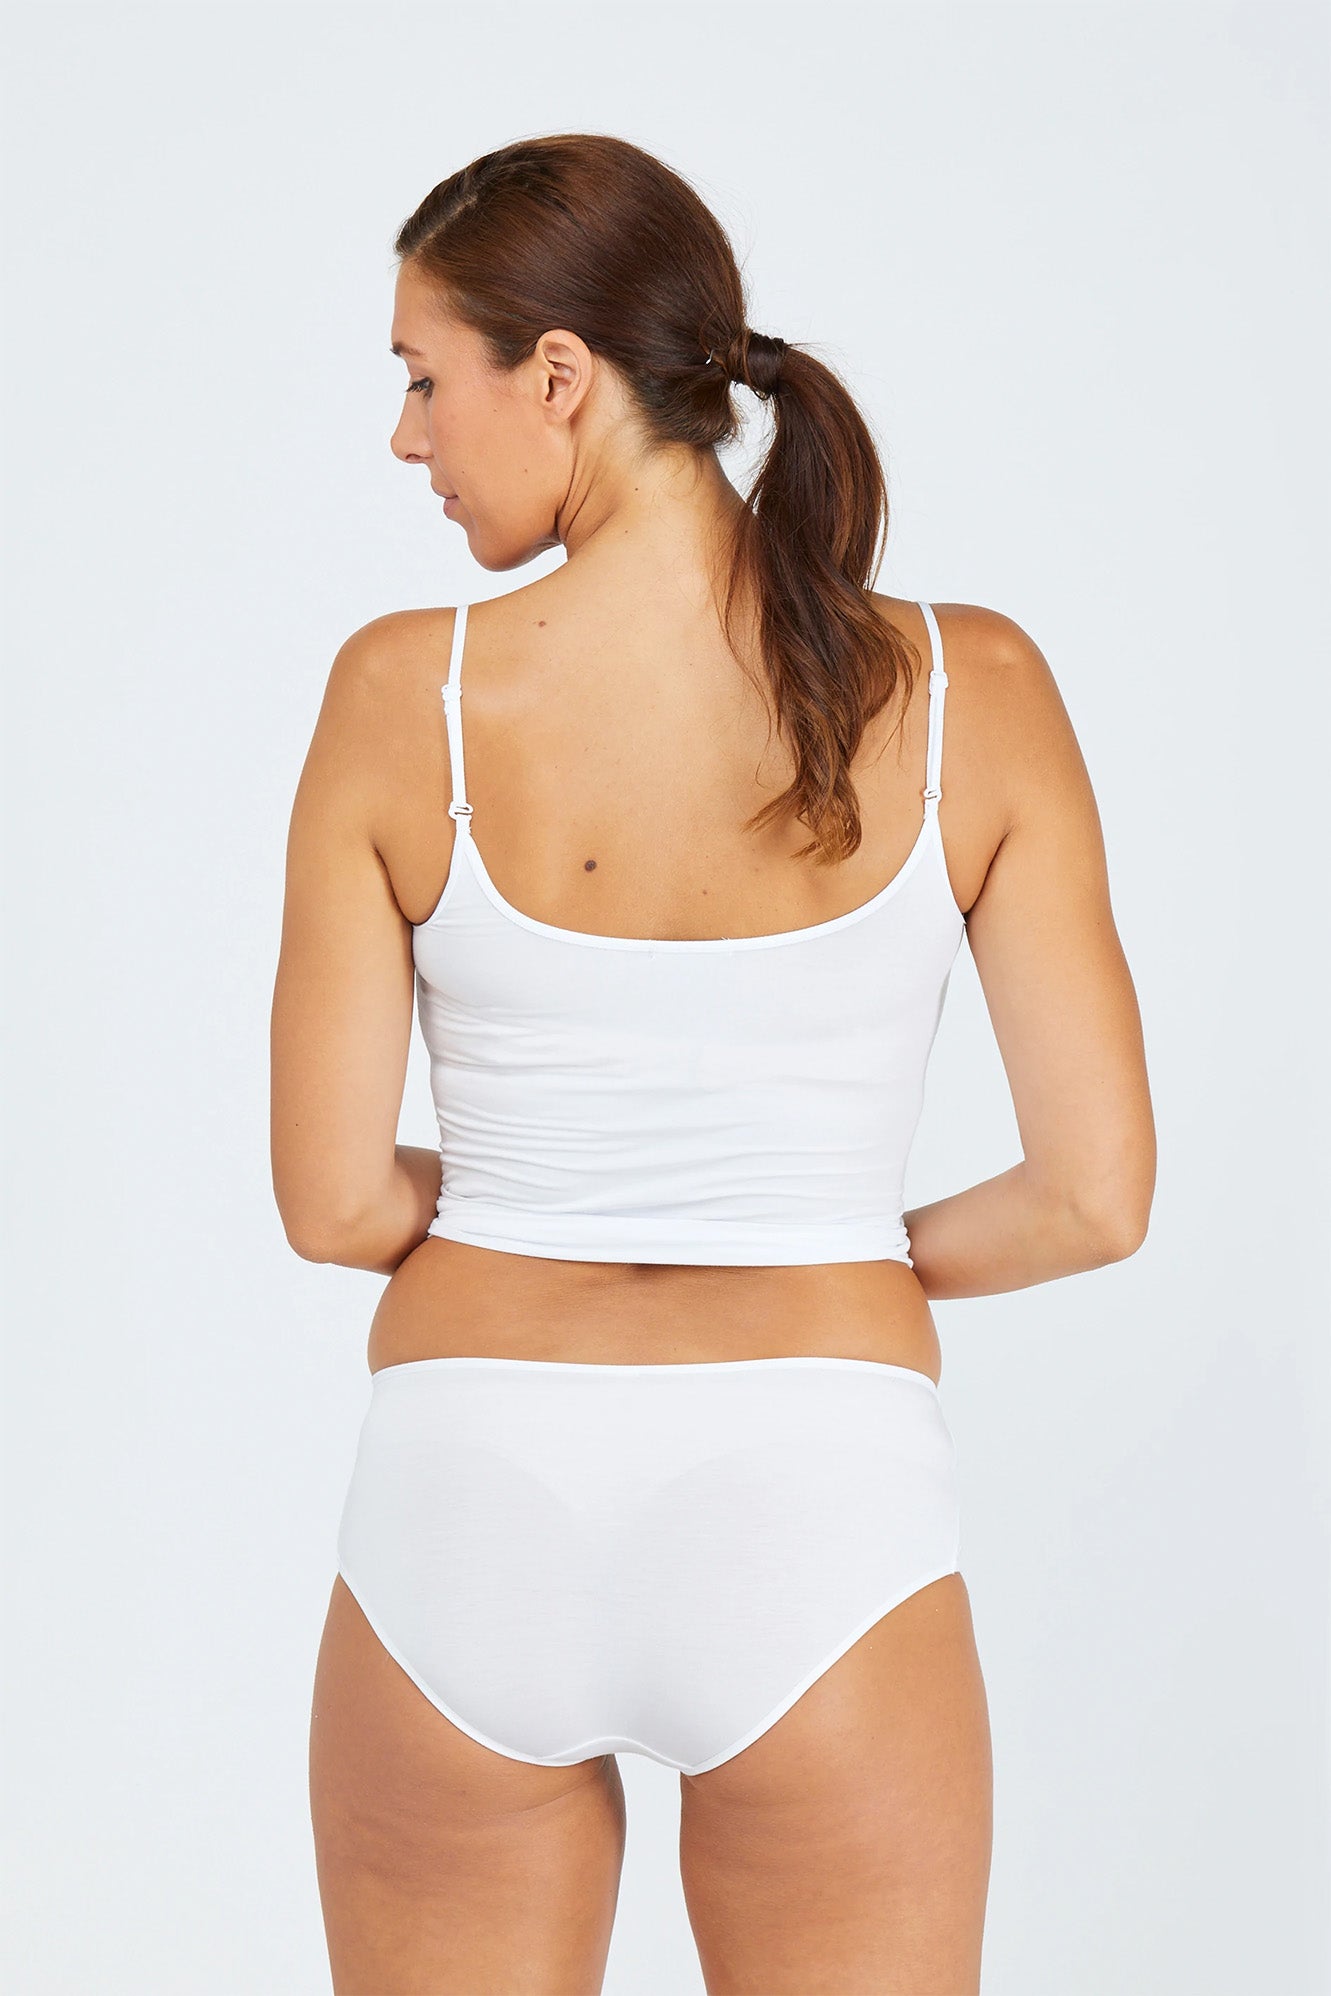 Woman wearing white tani 5984 Hipster Bikini back view